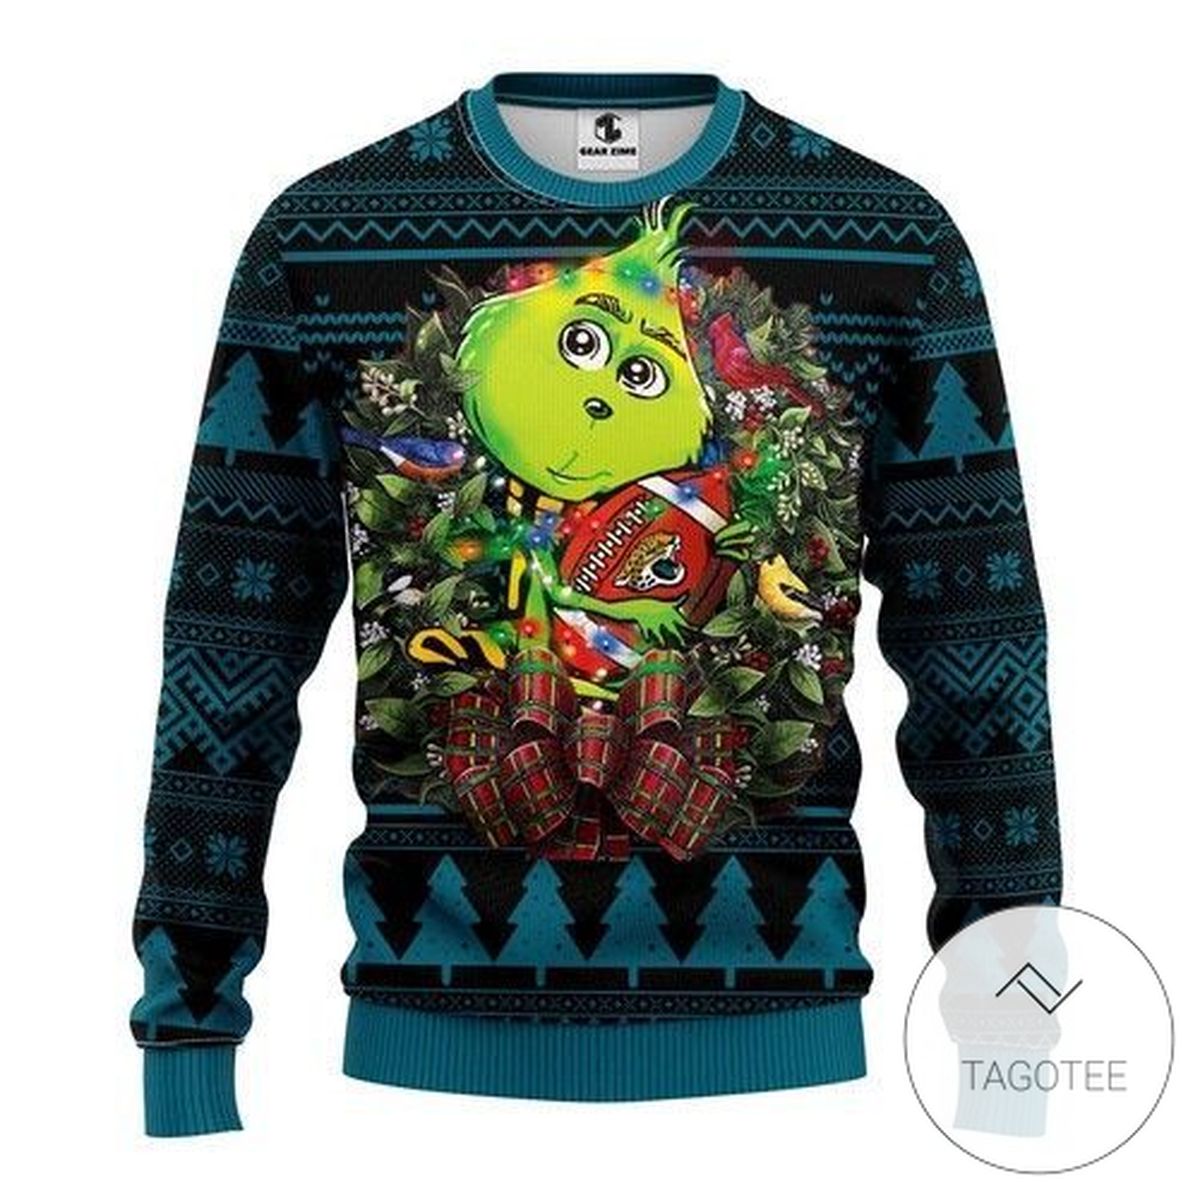 Nfl Jacksonville Jaguars Grinch Hug Sweatshirt Knitted Ugly Christmas Sweater